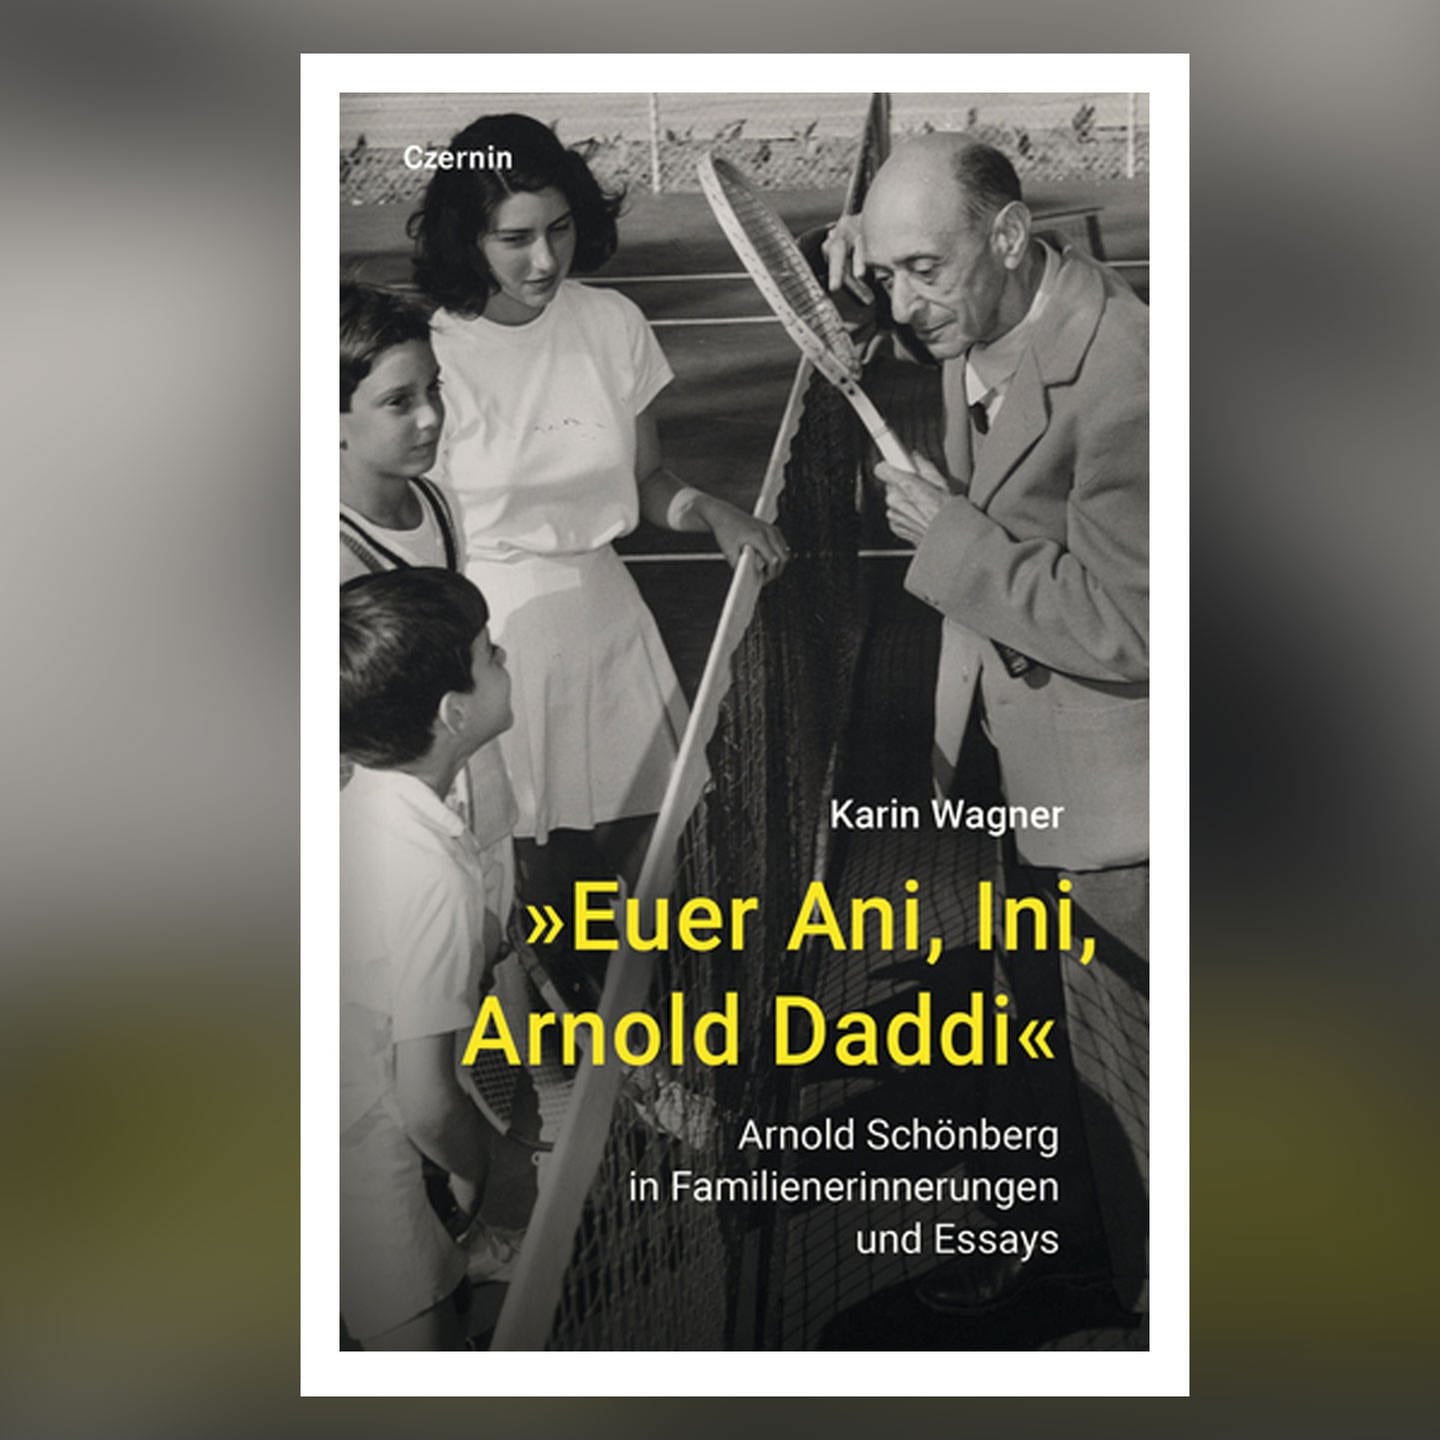 Intime Einblicke: Arnold Schönberg – Euer Ani, Ini, Arnold Daddi